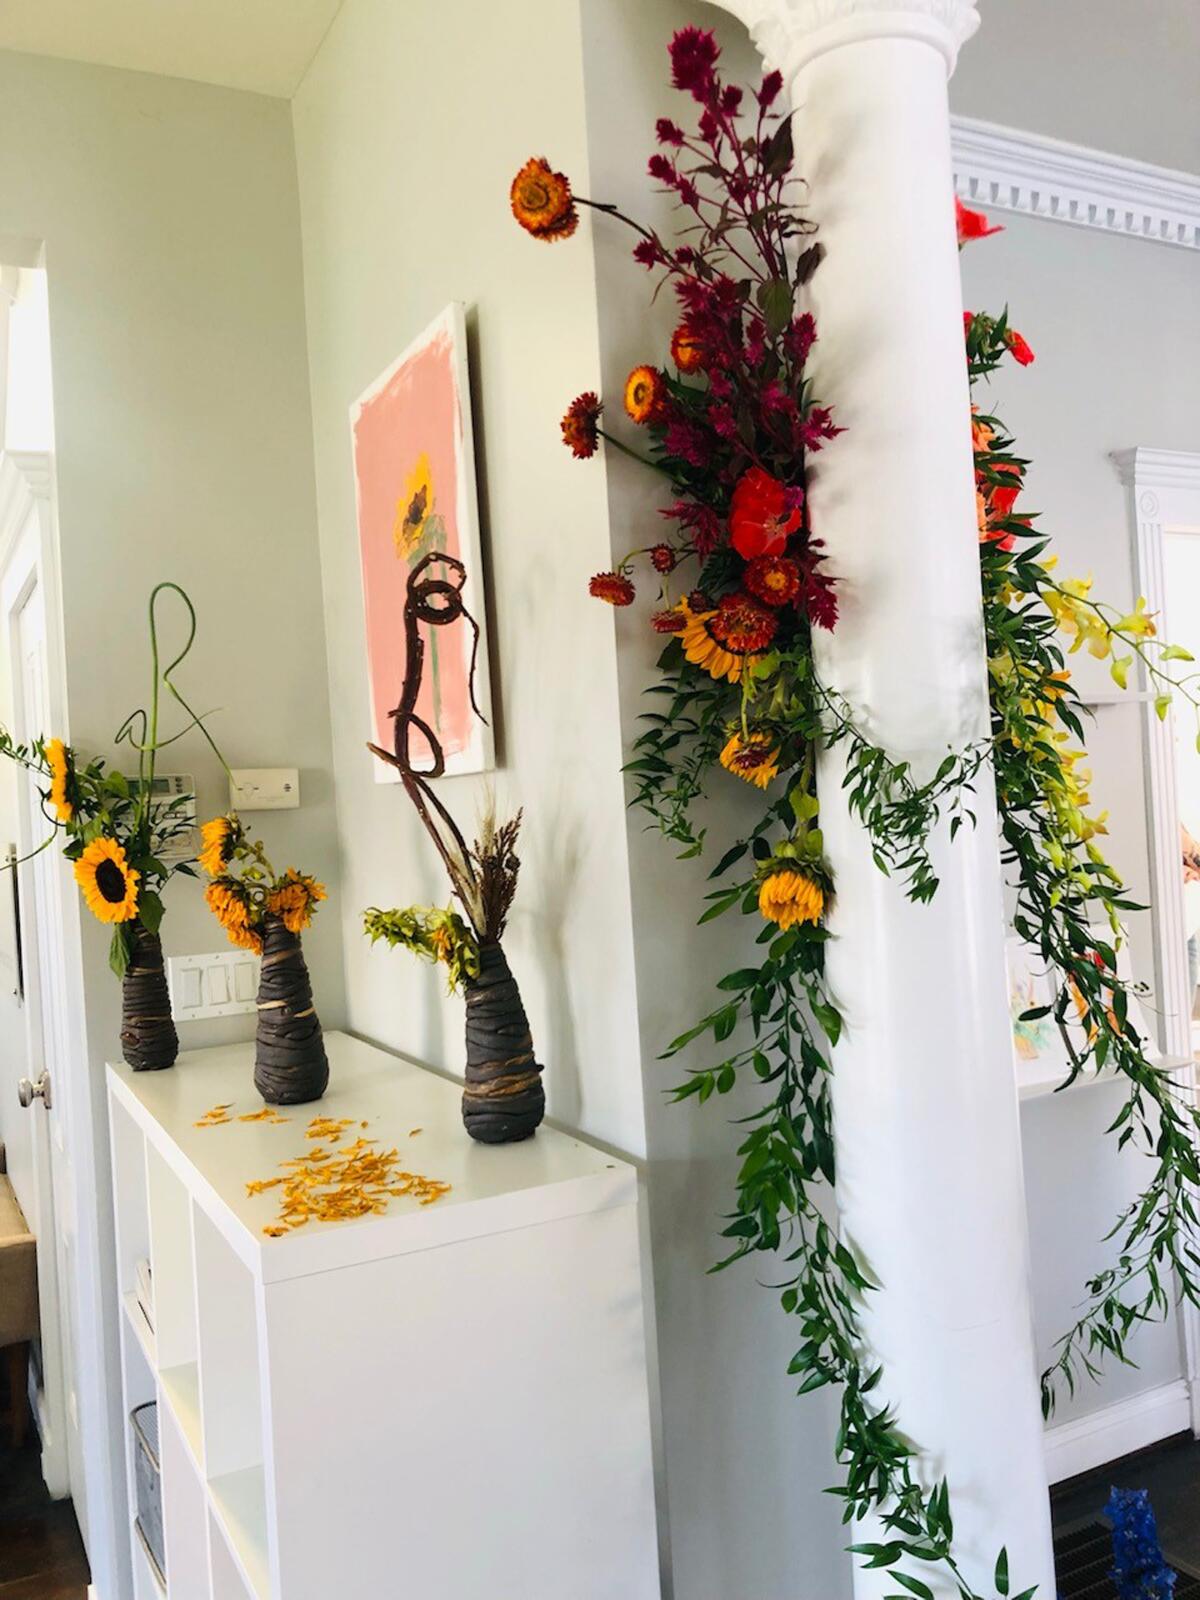 Live floral arrangements by Aubrey Mejia of Fibonacci Florals frame Andrew Alcasid's sunflower painting